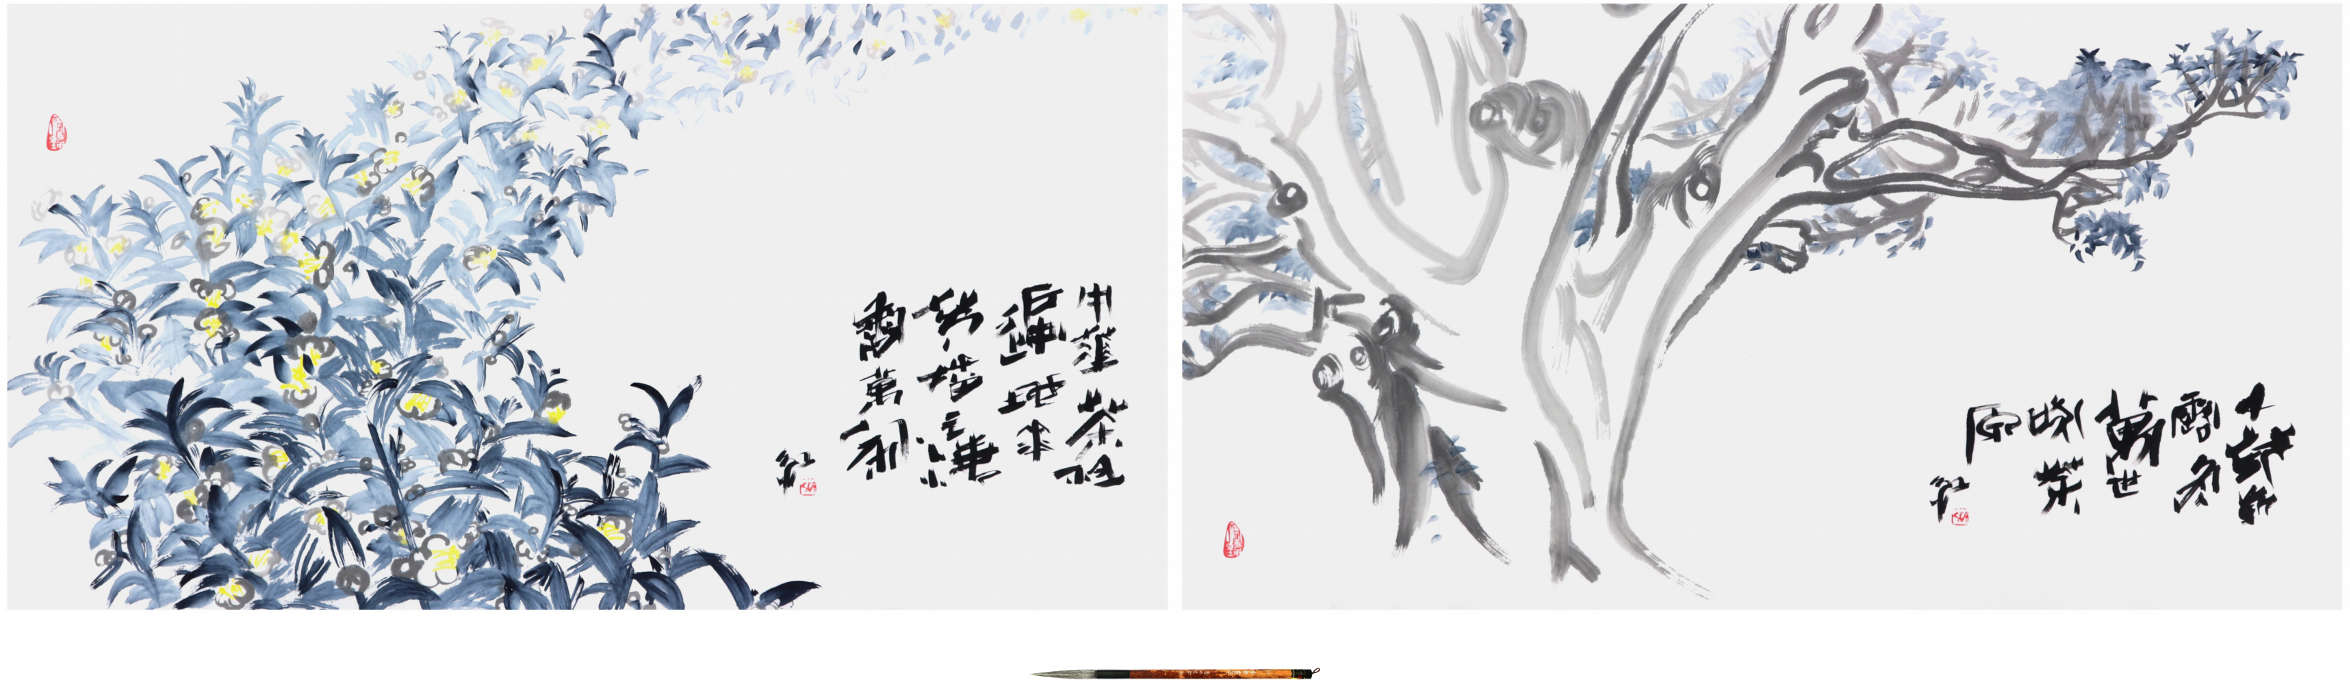 Sai Koh (Qi Hong)’s Freehand Brushwork Chinese Paintings: bird-and-flower painting, literati painting, ink wash painting